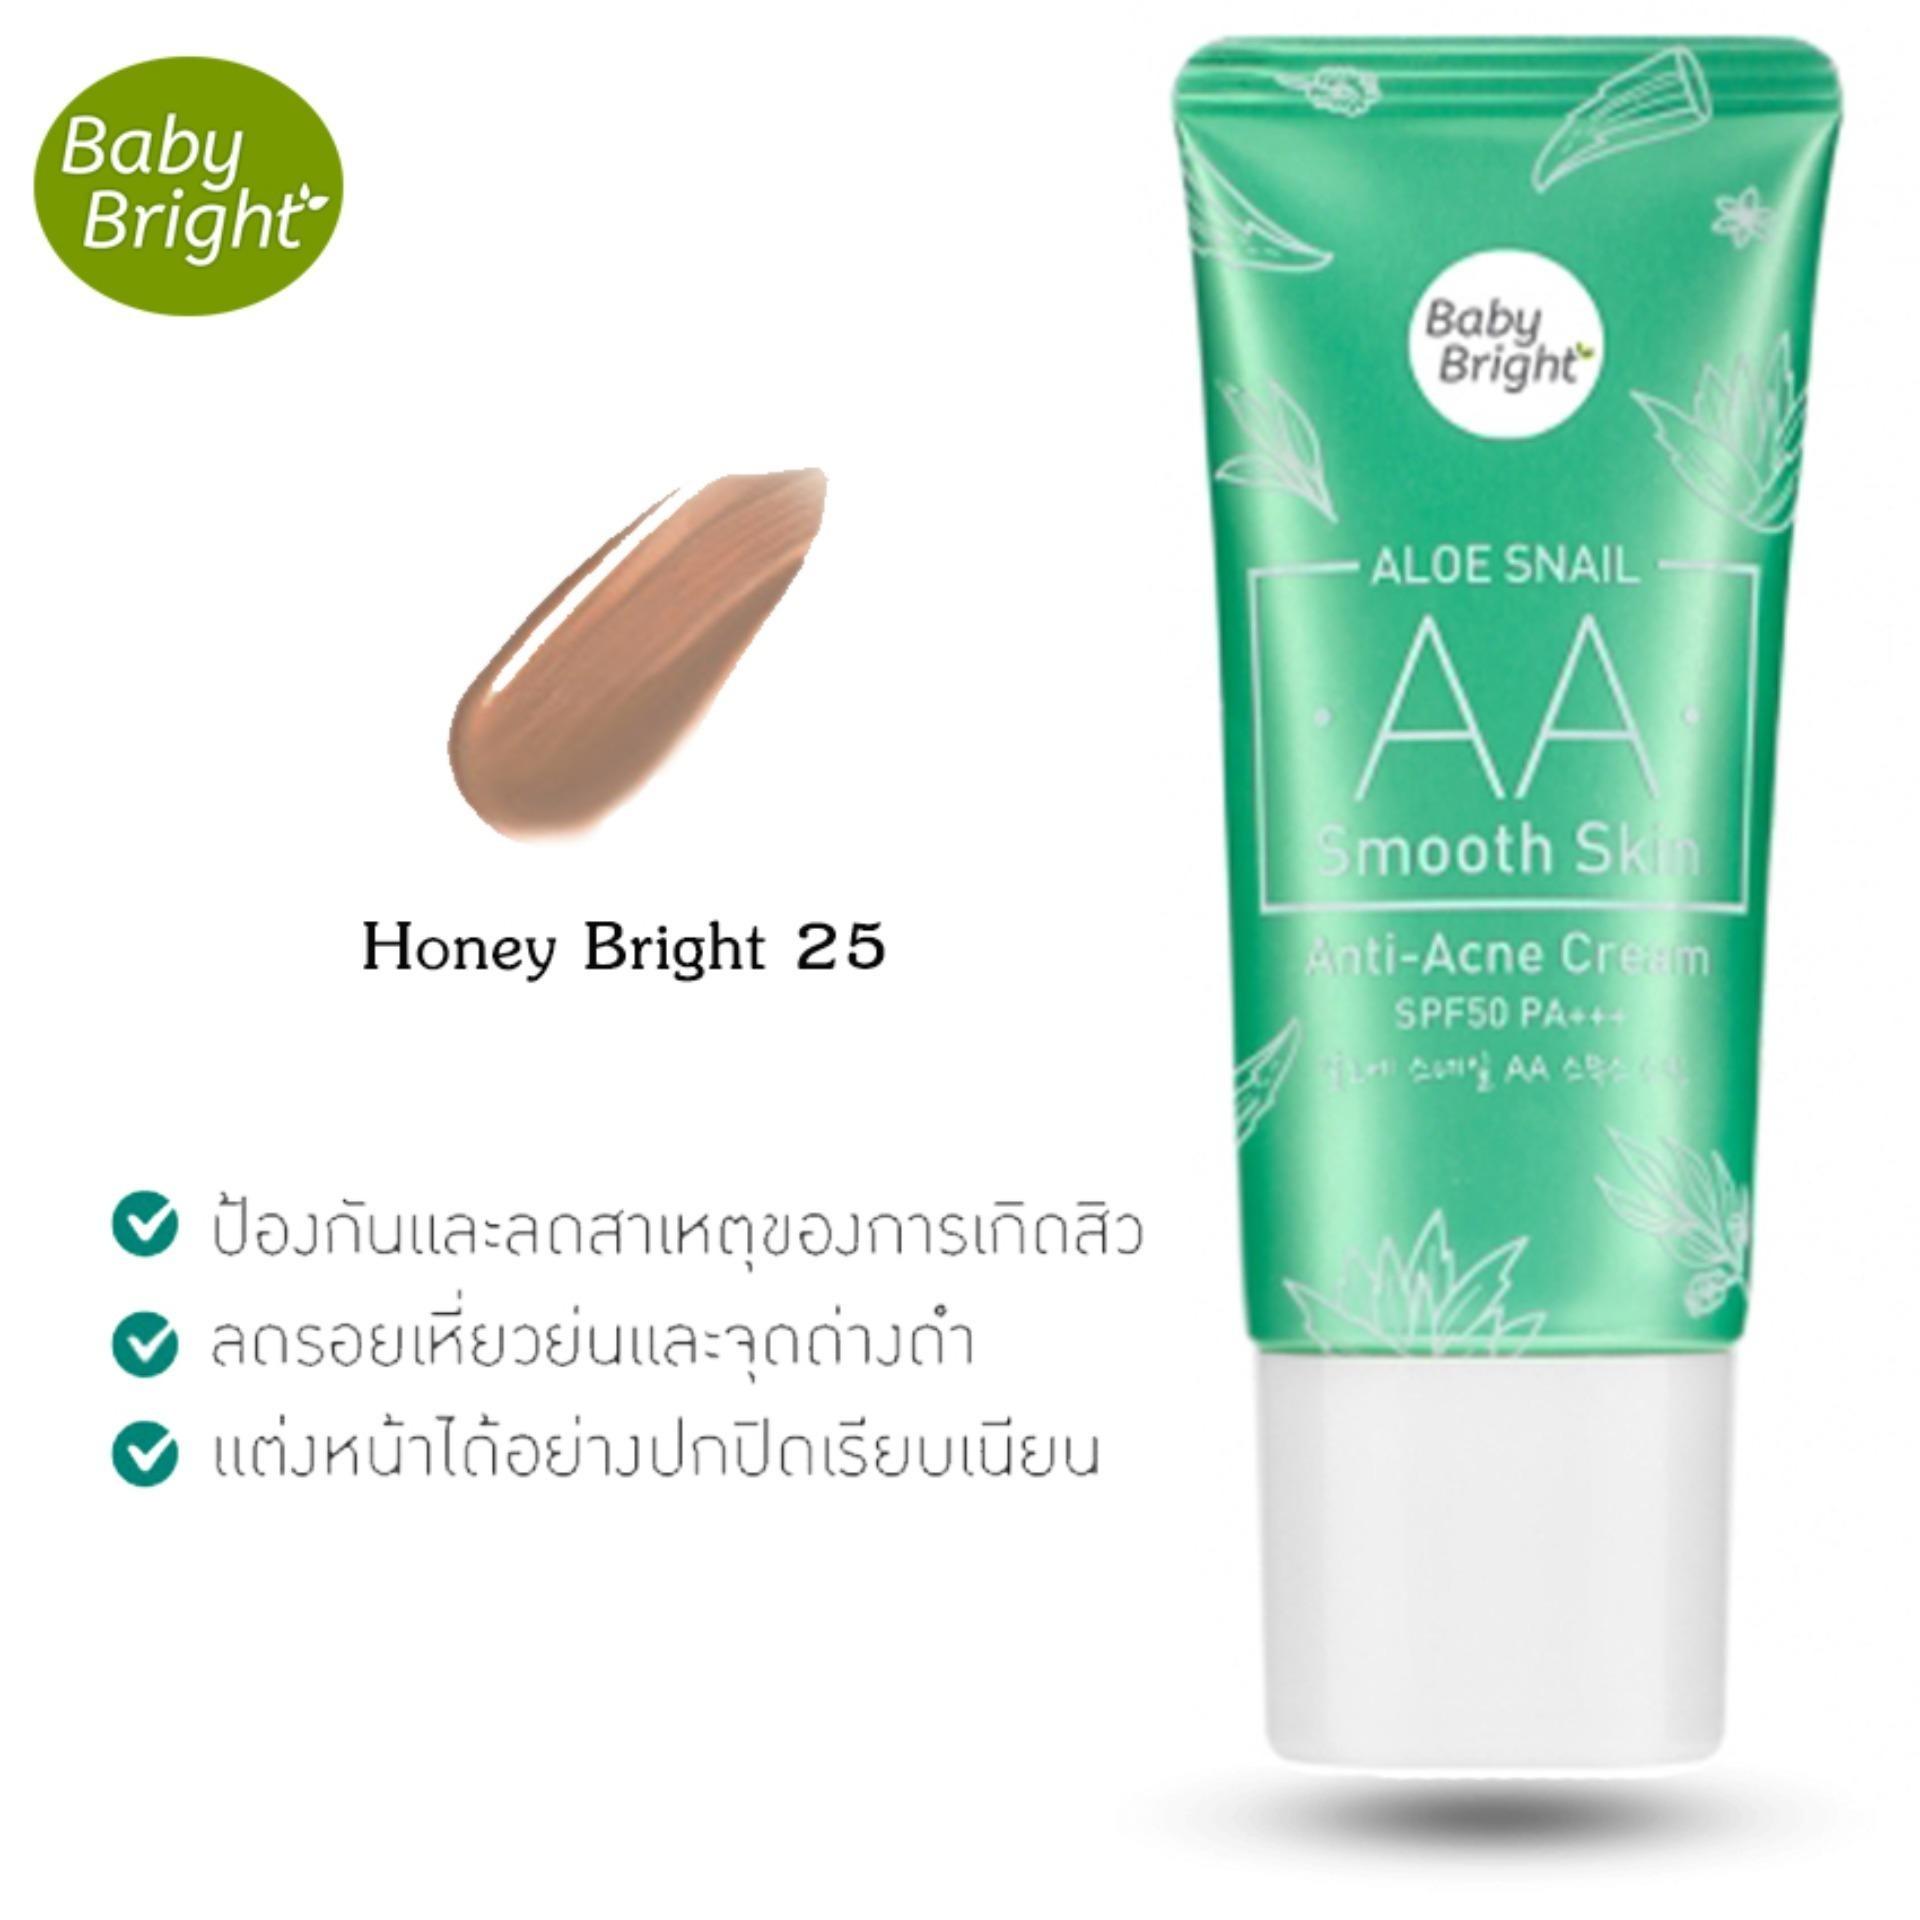 karmart Aloe Snail AA Smooth Skin Anti-Acne Cream SPF50 PA+++ 30g Baby Bright อโลสเนลเอเอครีม ป้องกันสิว no.25ผิวคล้ำ